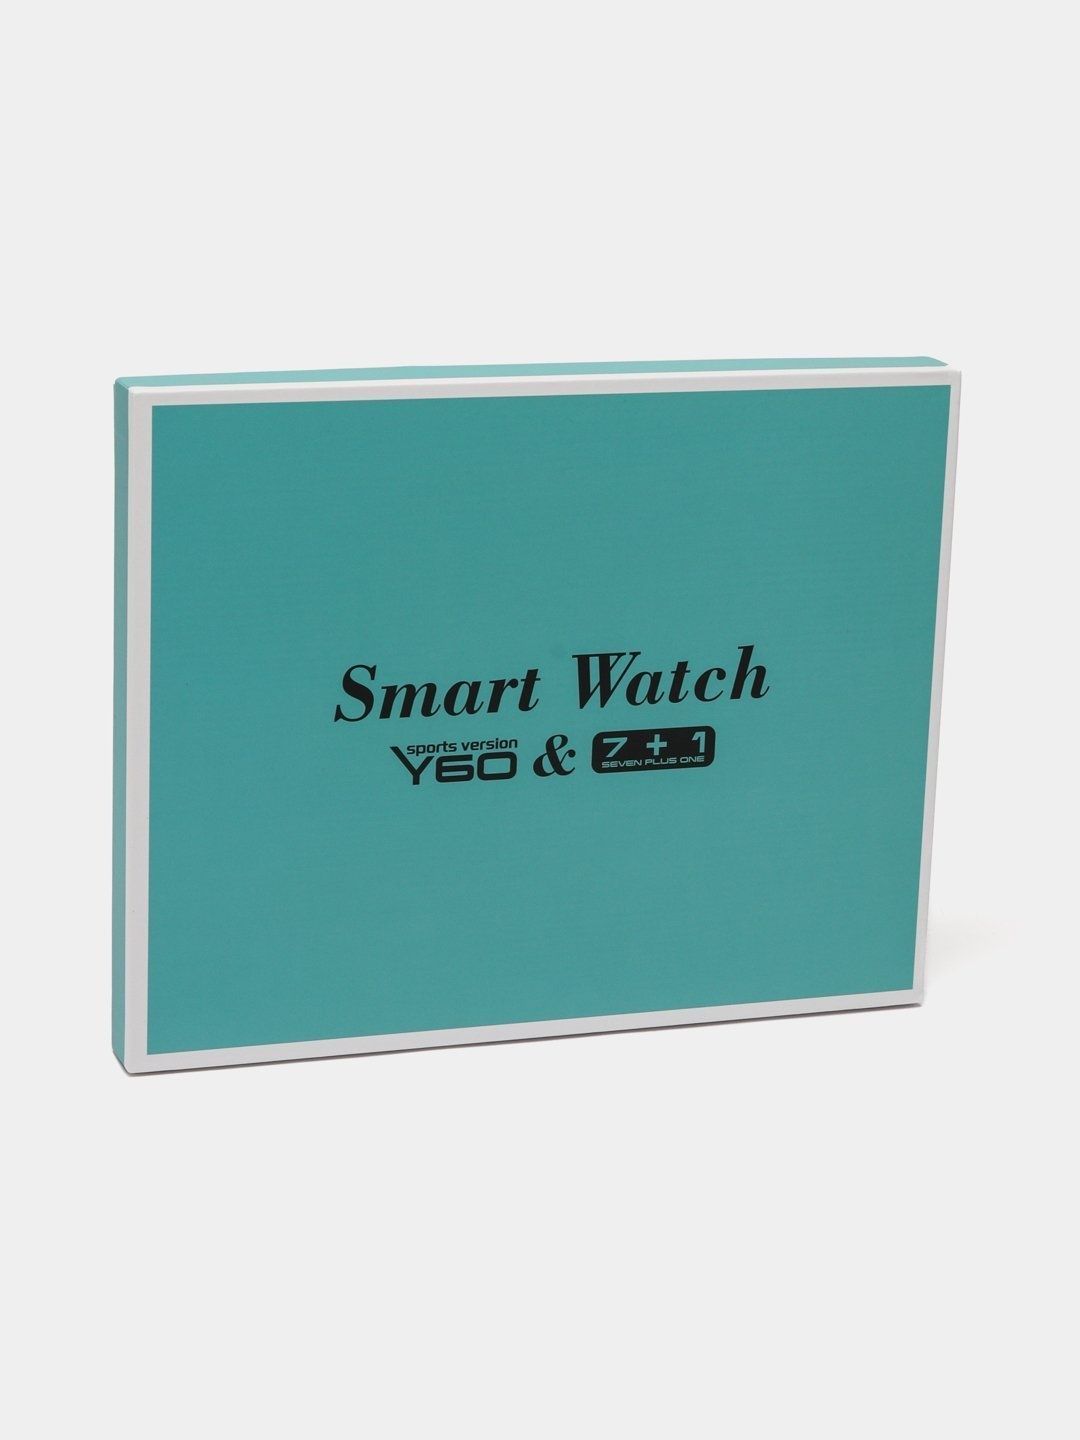 Smart watch y60 (7+1)